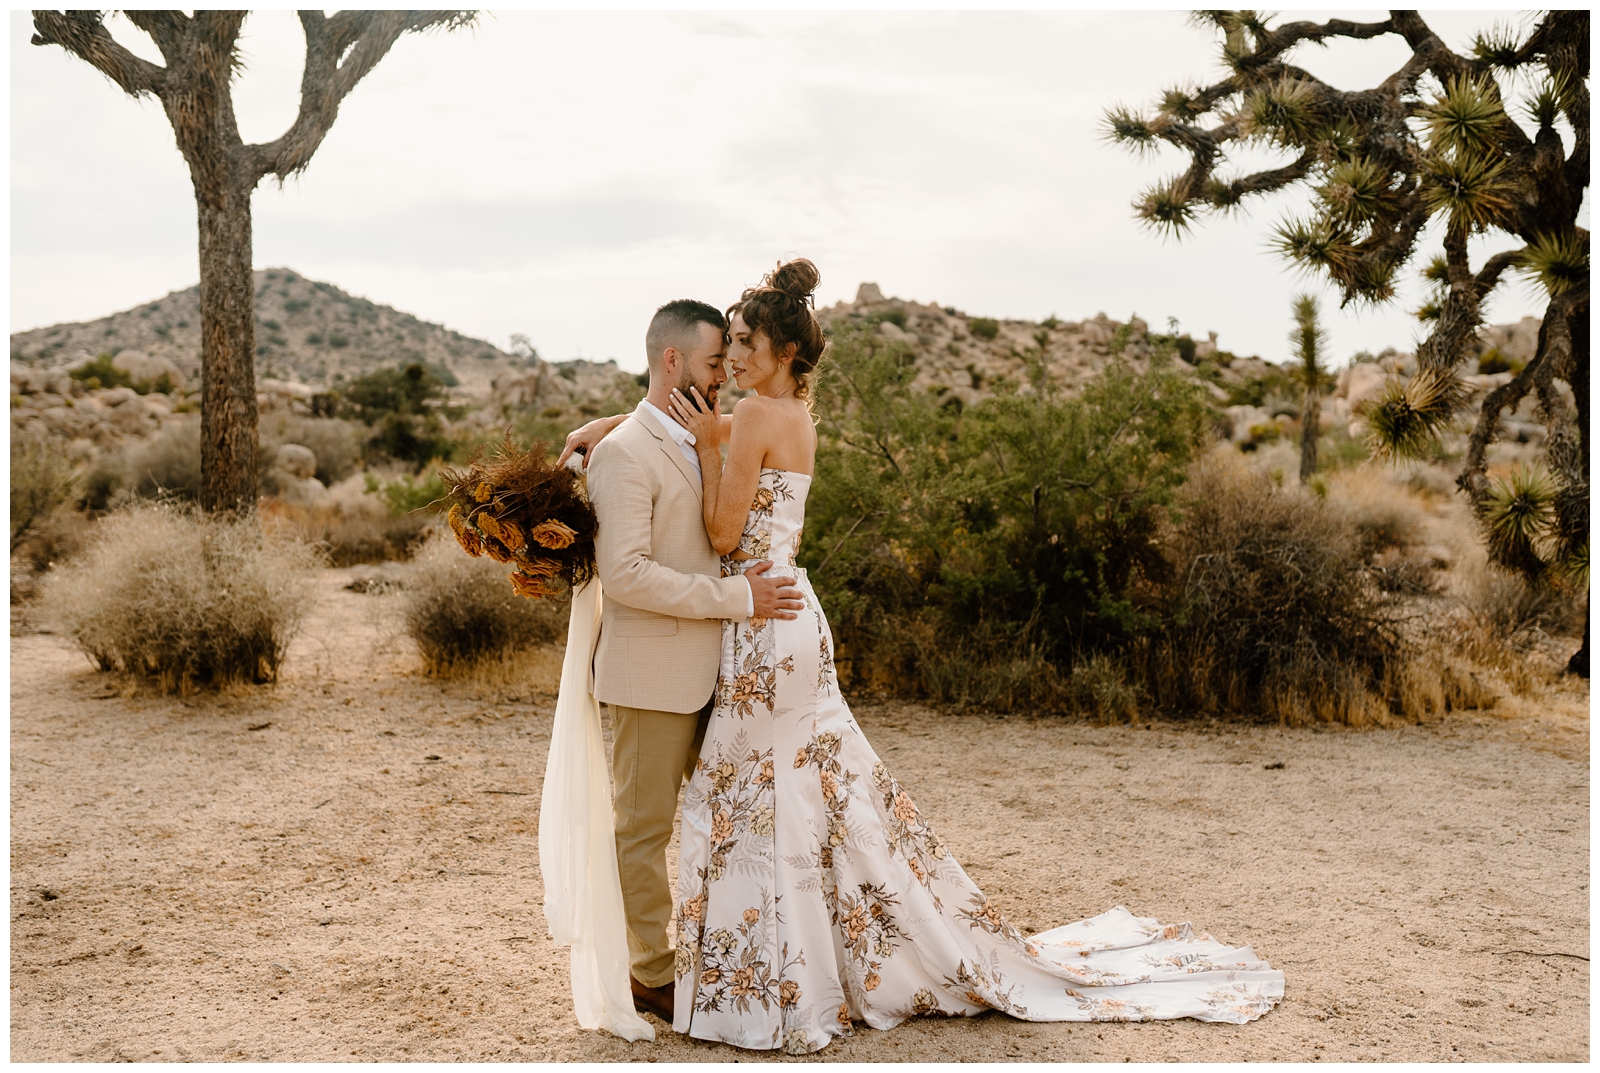 Intimate and romantic desert portraits, Joshua Tree elopement by travel wedding photographer Kayli LaFon